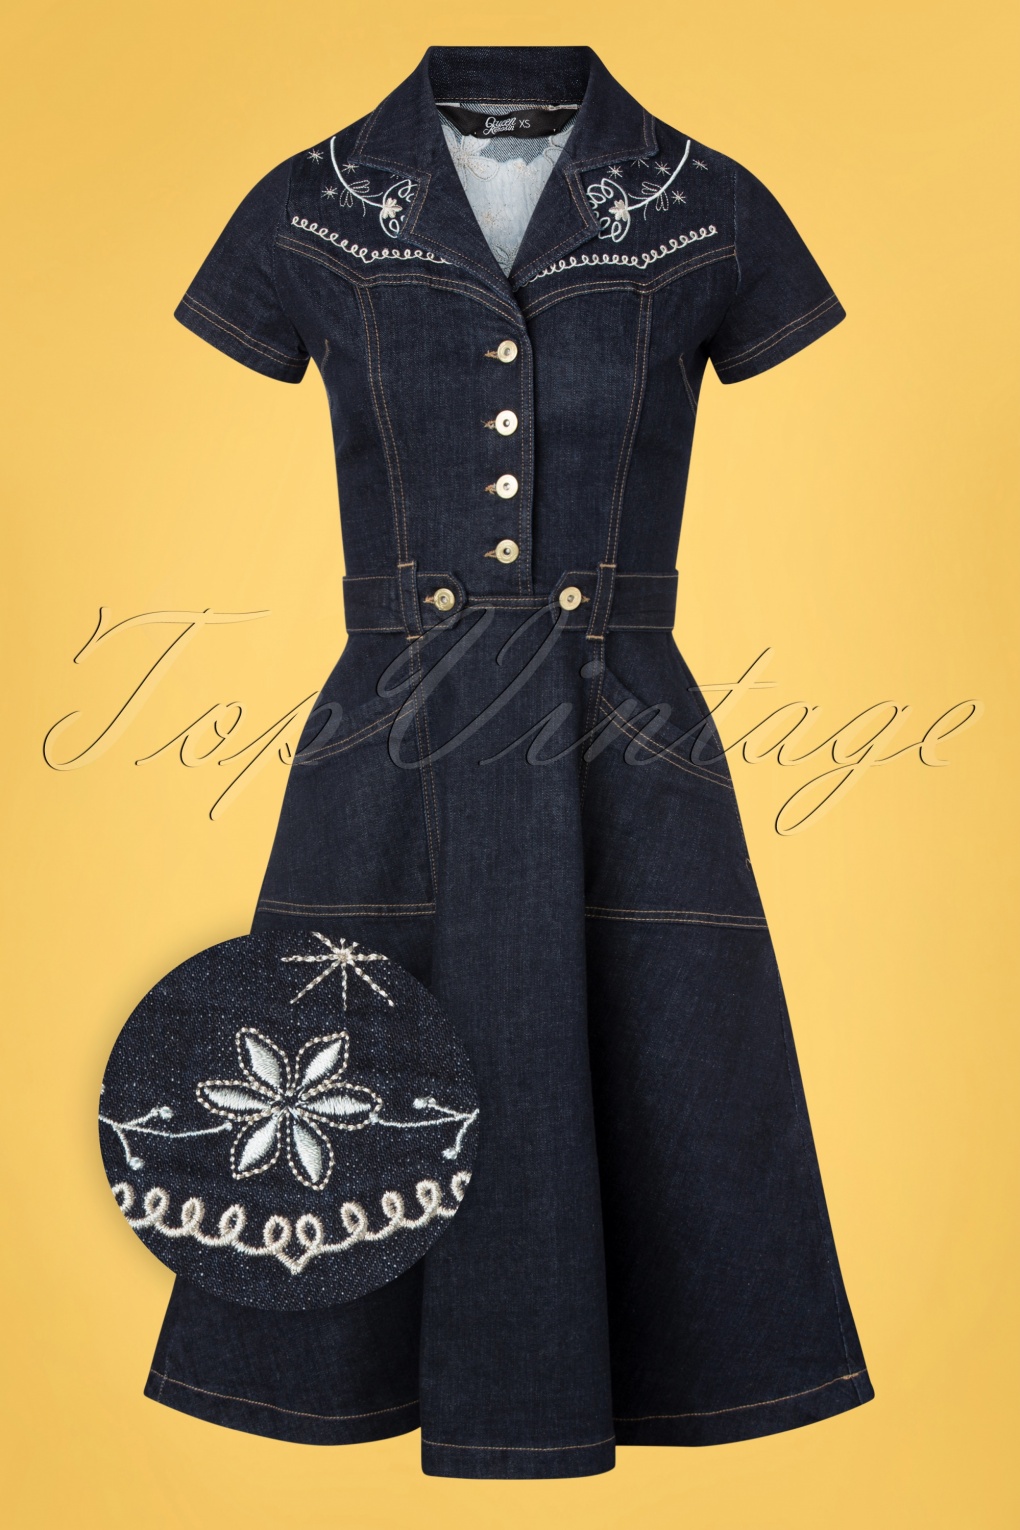 Vintage Western Wear Clothing, Outfit Ideas 50s Western Flowers Swing Dress in Dark Denim Blue  AT vintagedancer.com